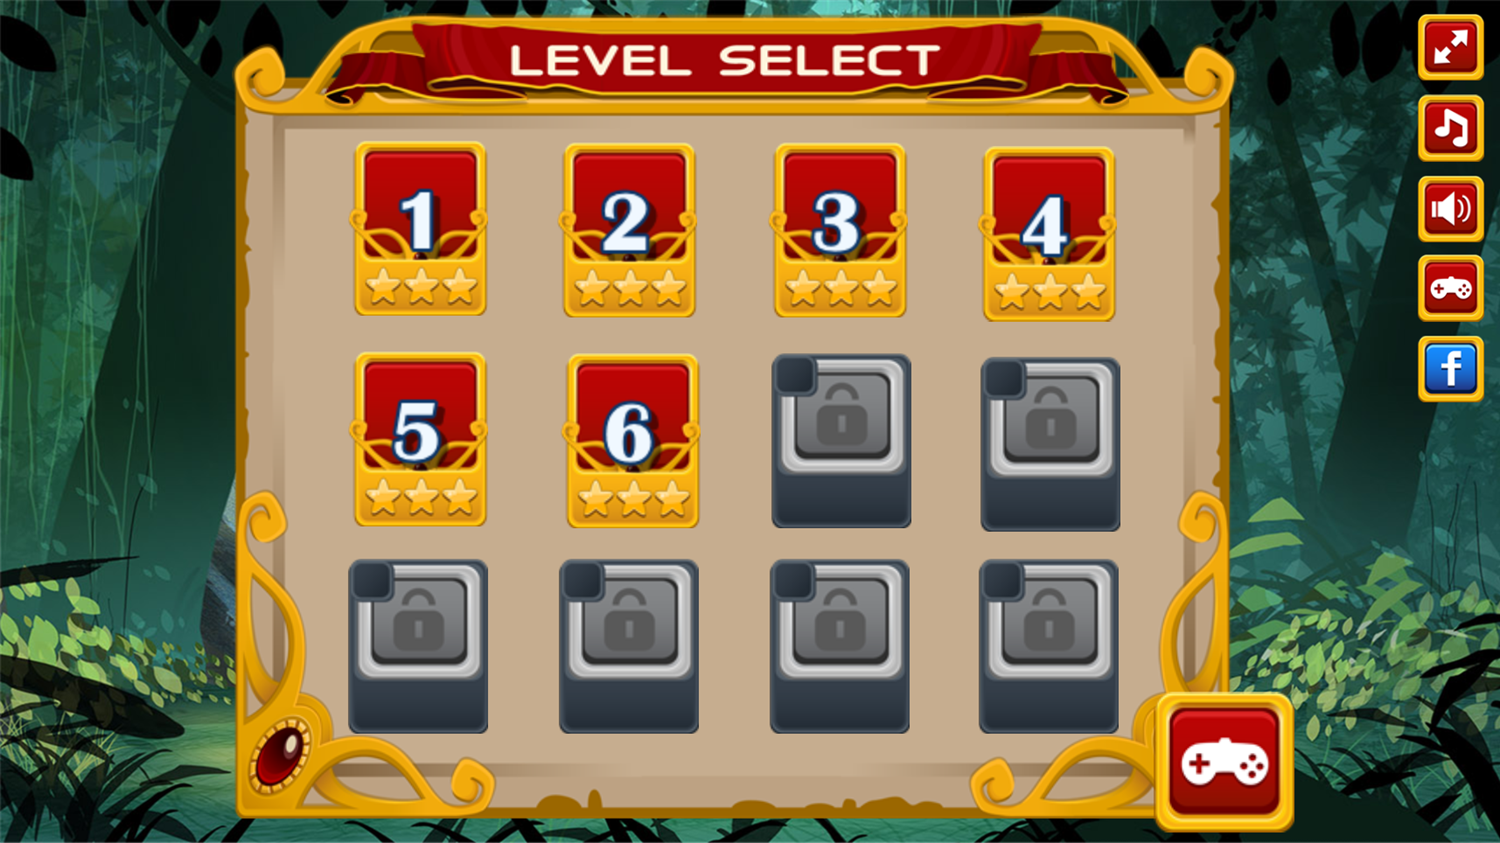 Boy Adventurer Game Level Select Screenshot.